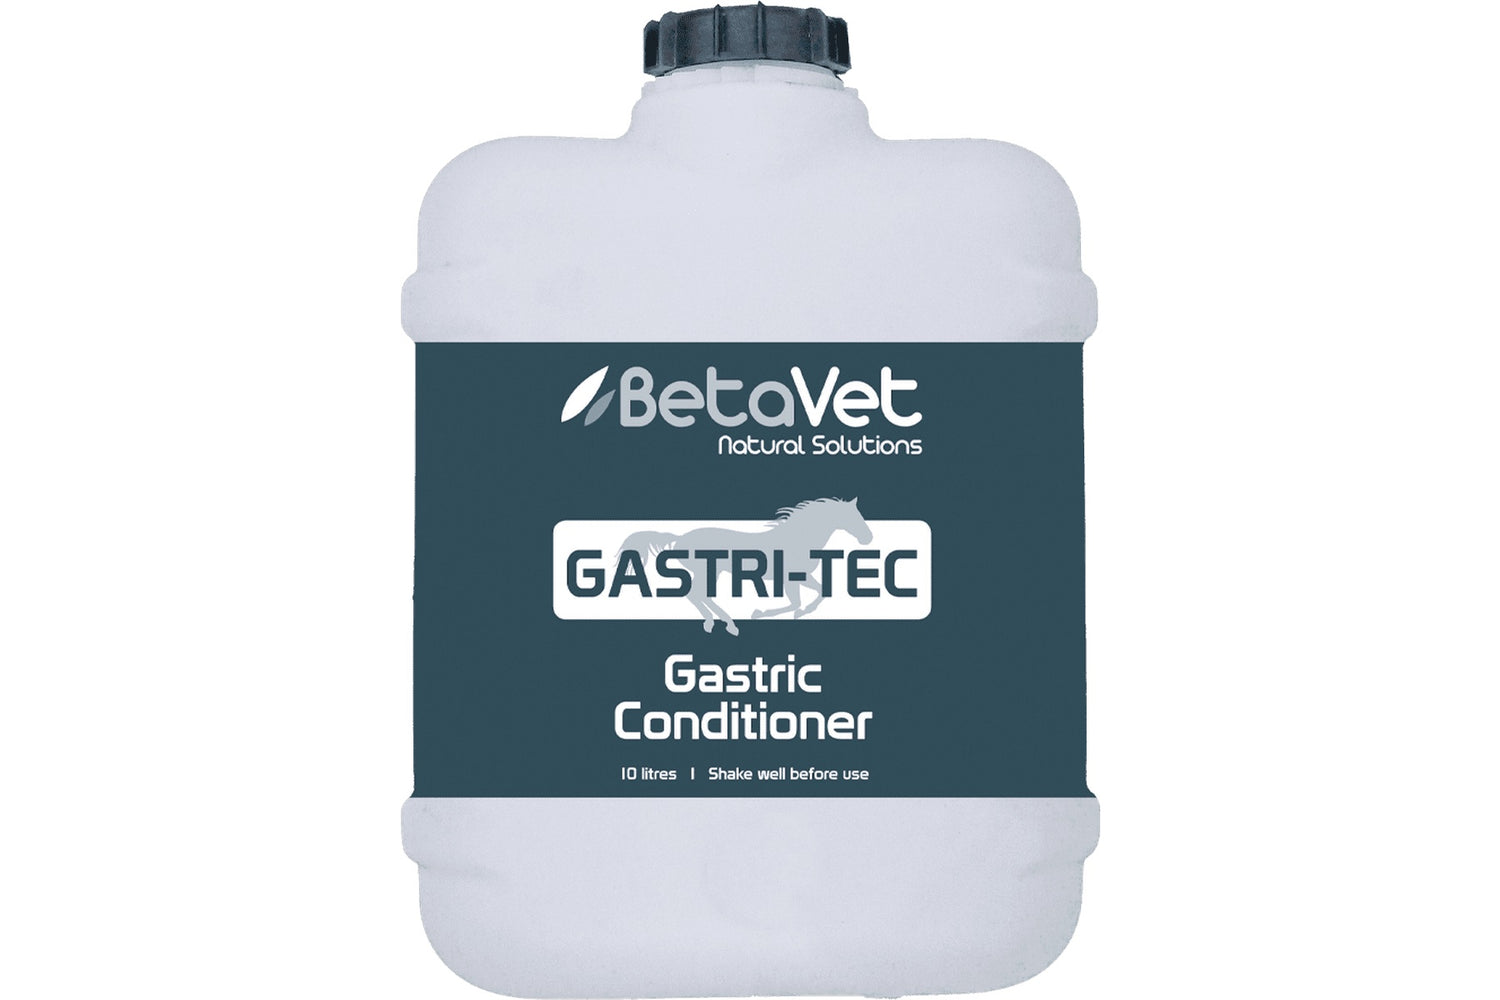 GASTRI-TEC